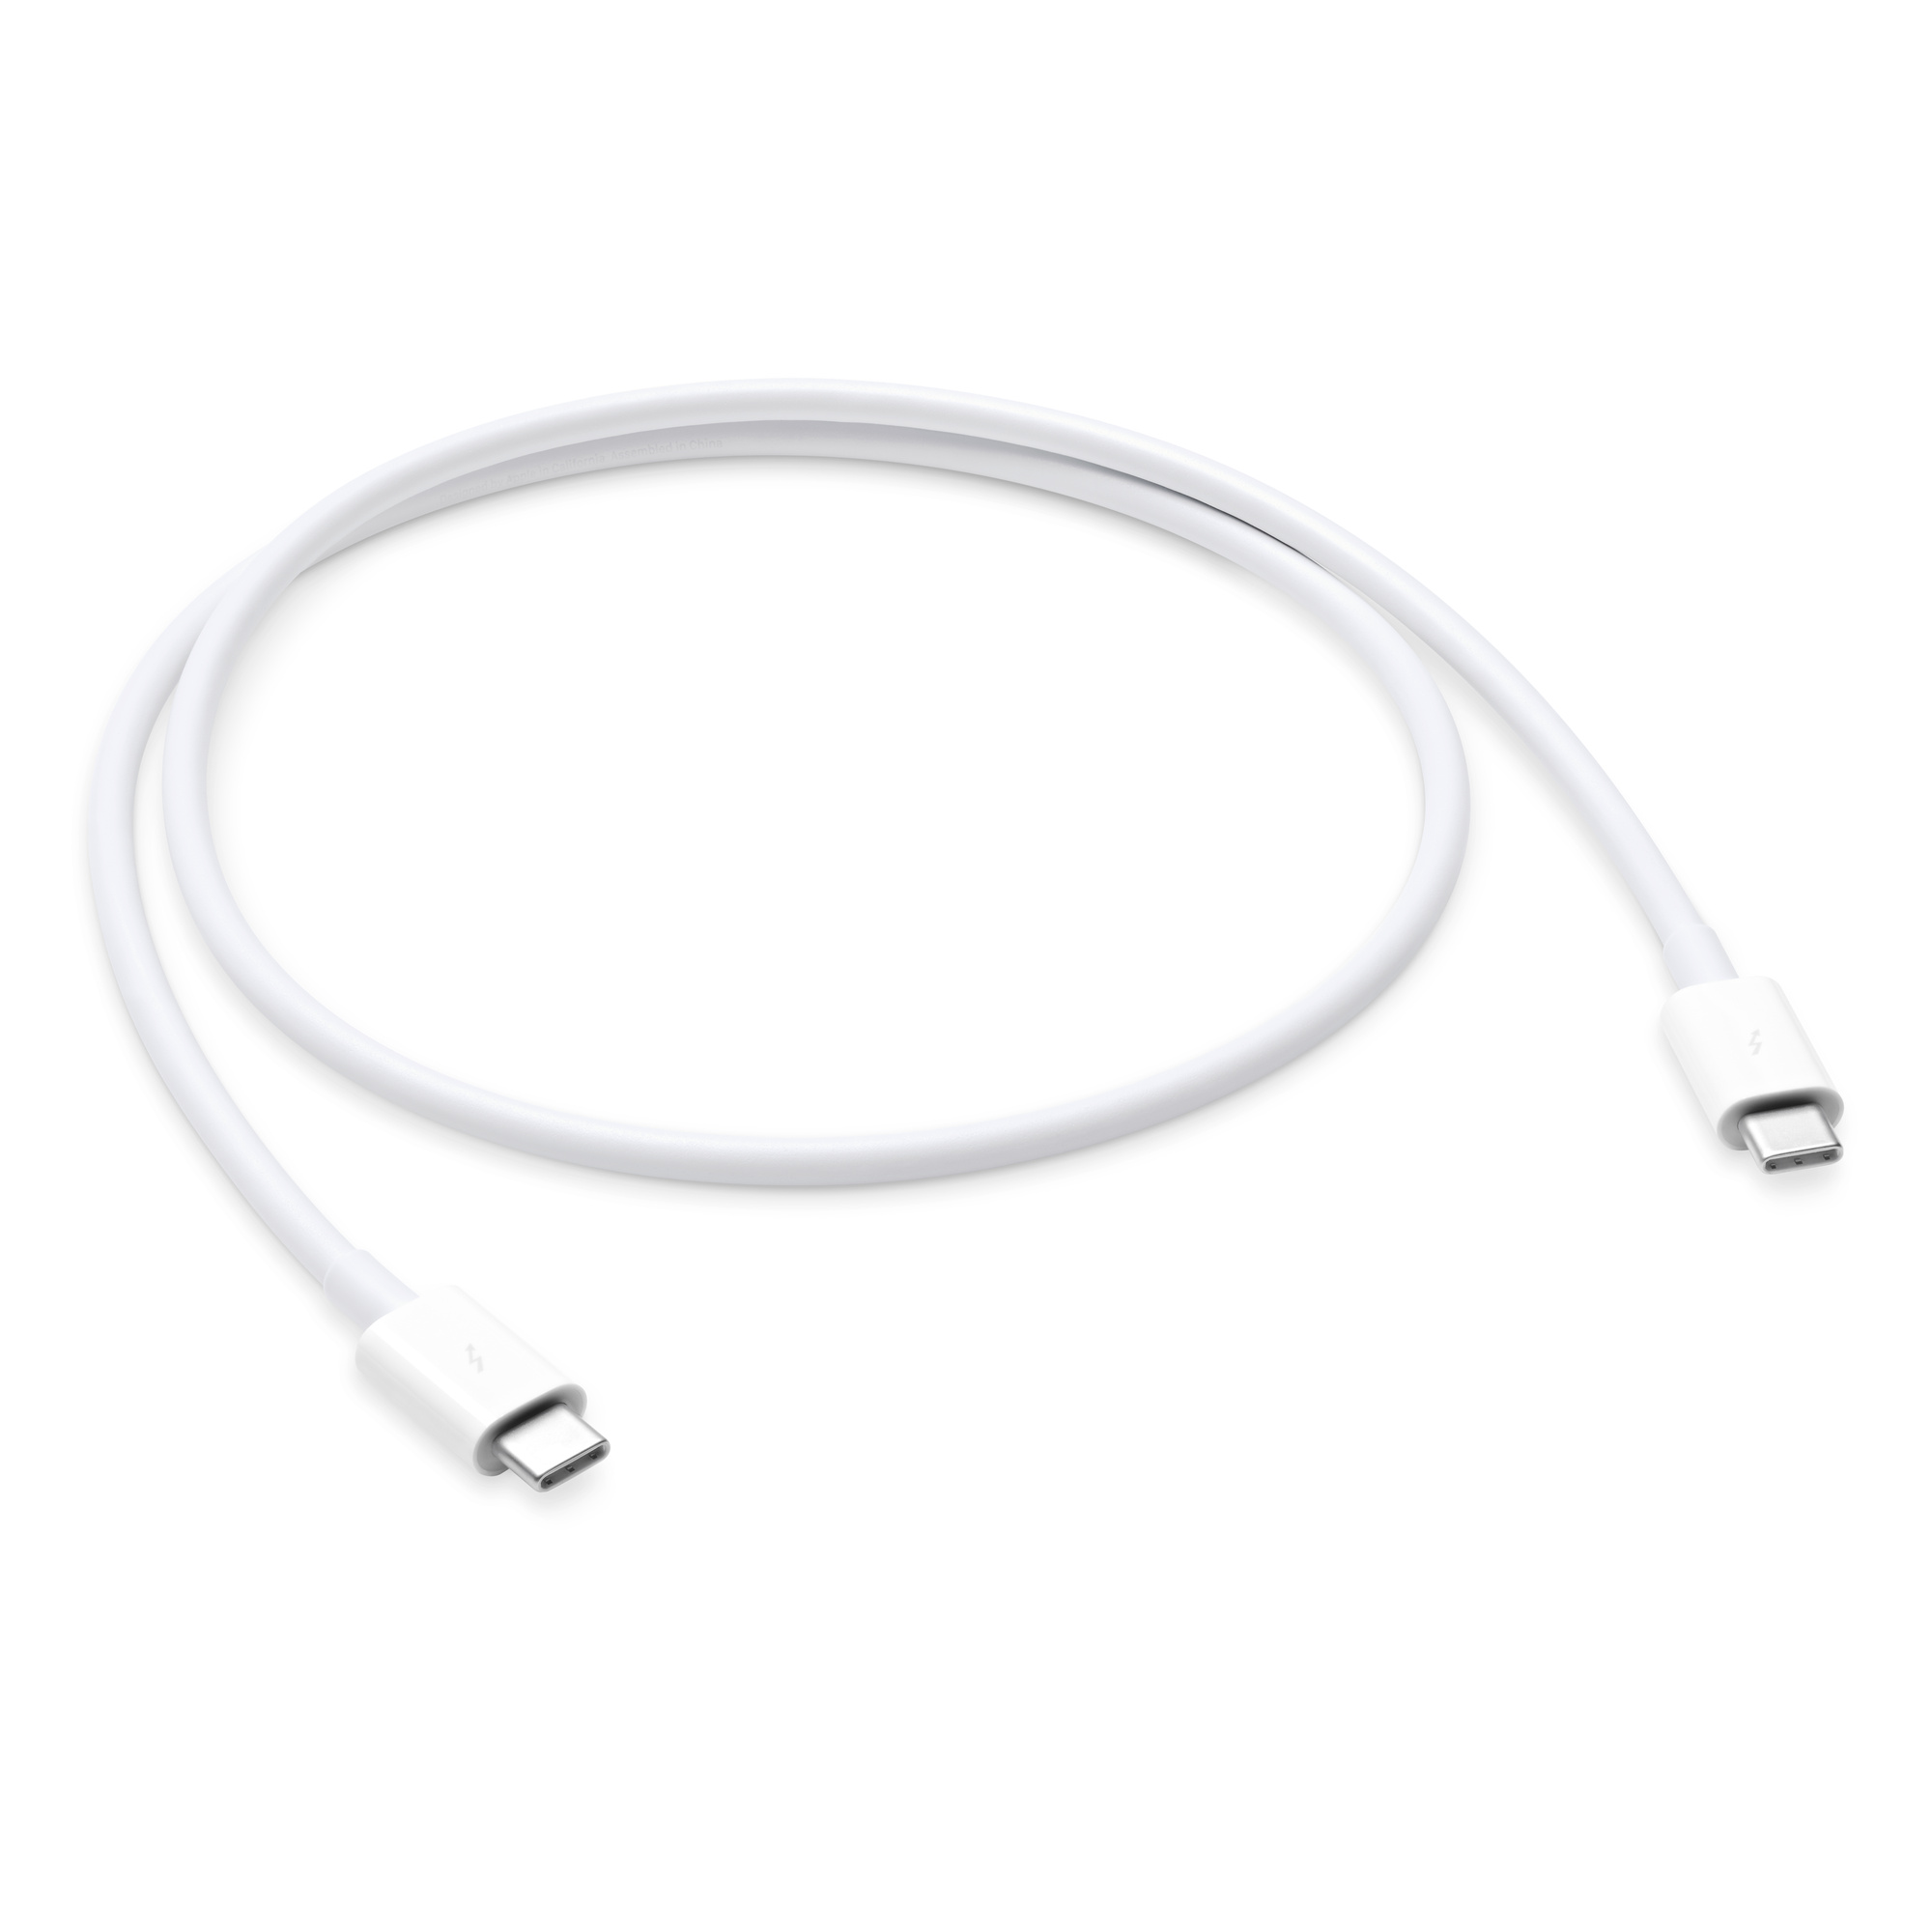 Apple Thunderbolt 3 (USB-C) Cable (0.8m)